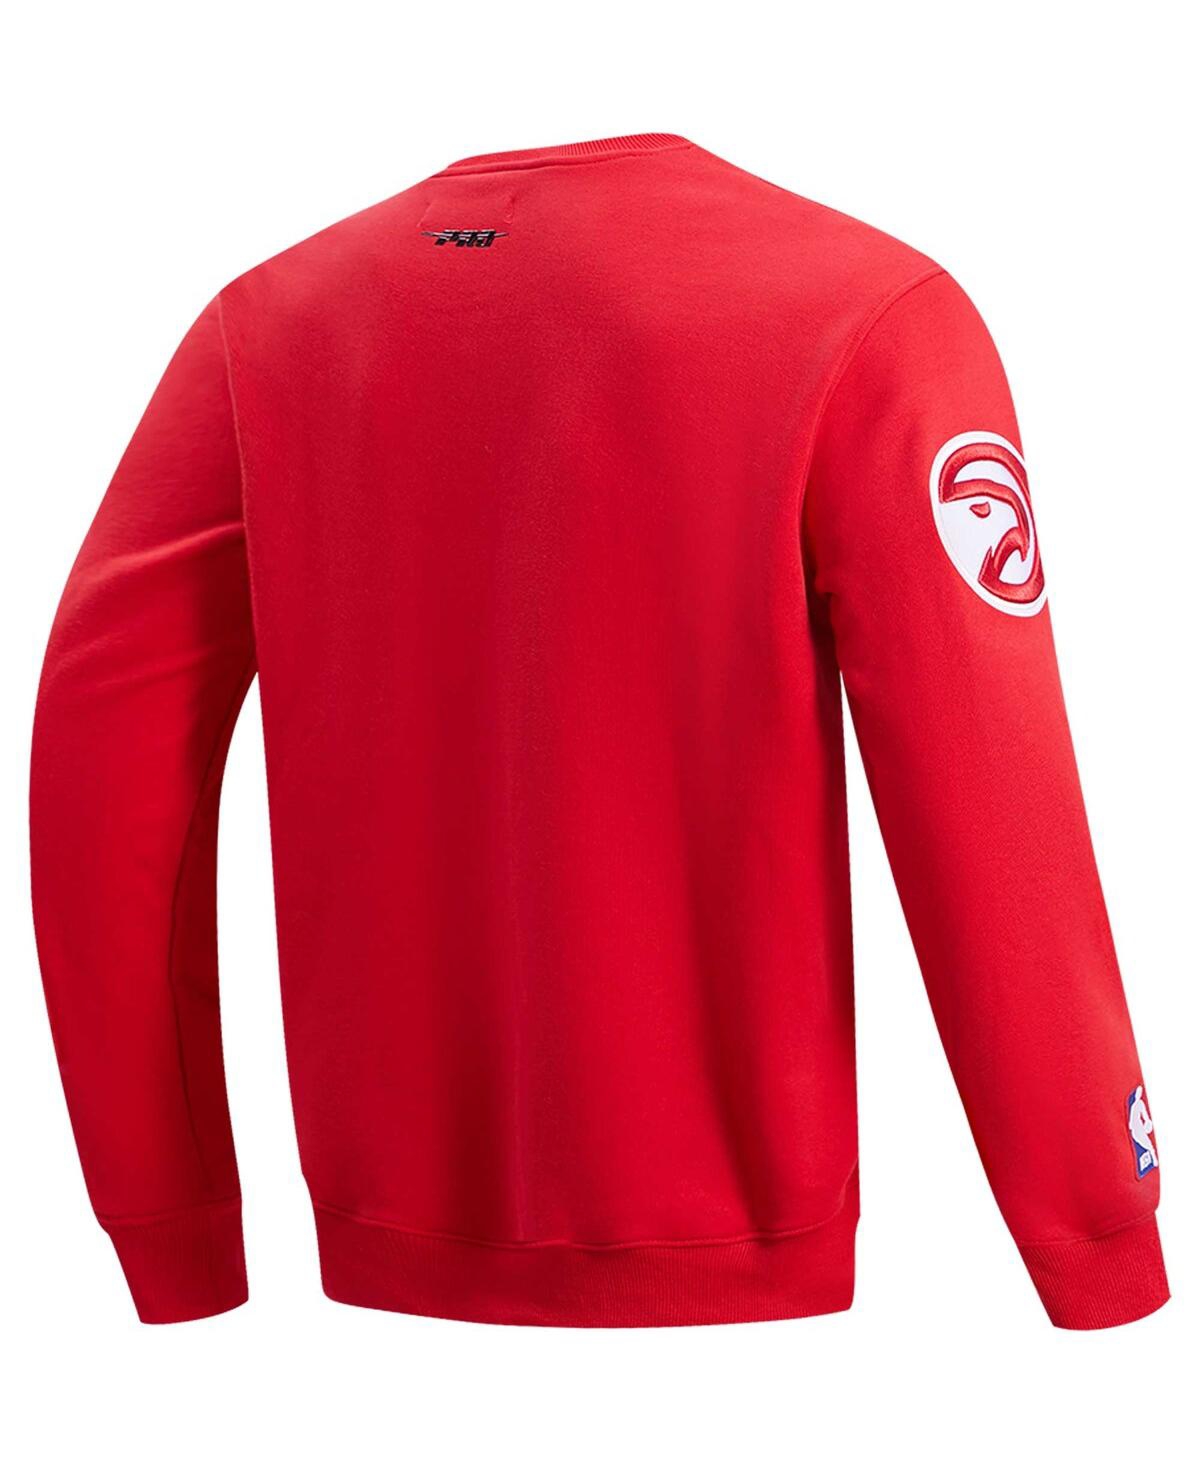 Shop Pro Standard Men's  Trae Young Red Atlanta Hawks Avatar Pullover Sweatshirt